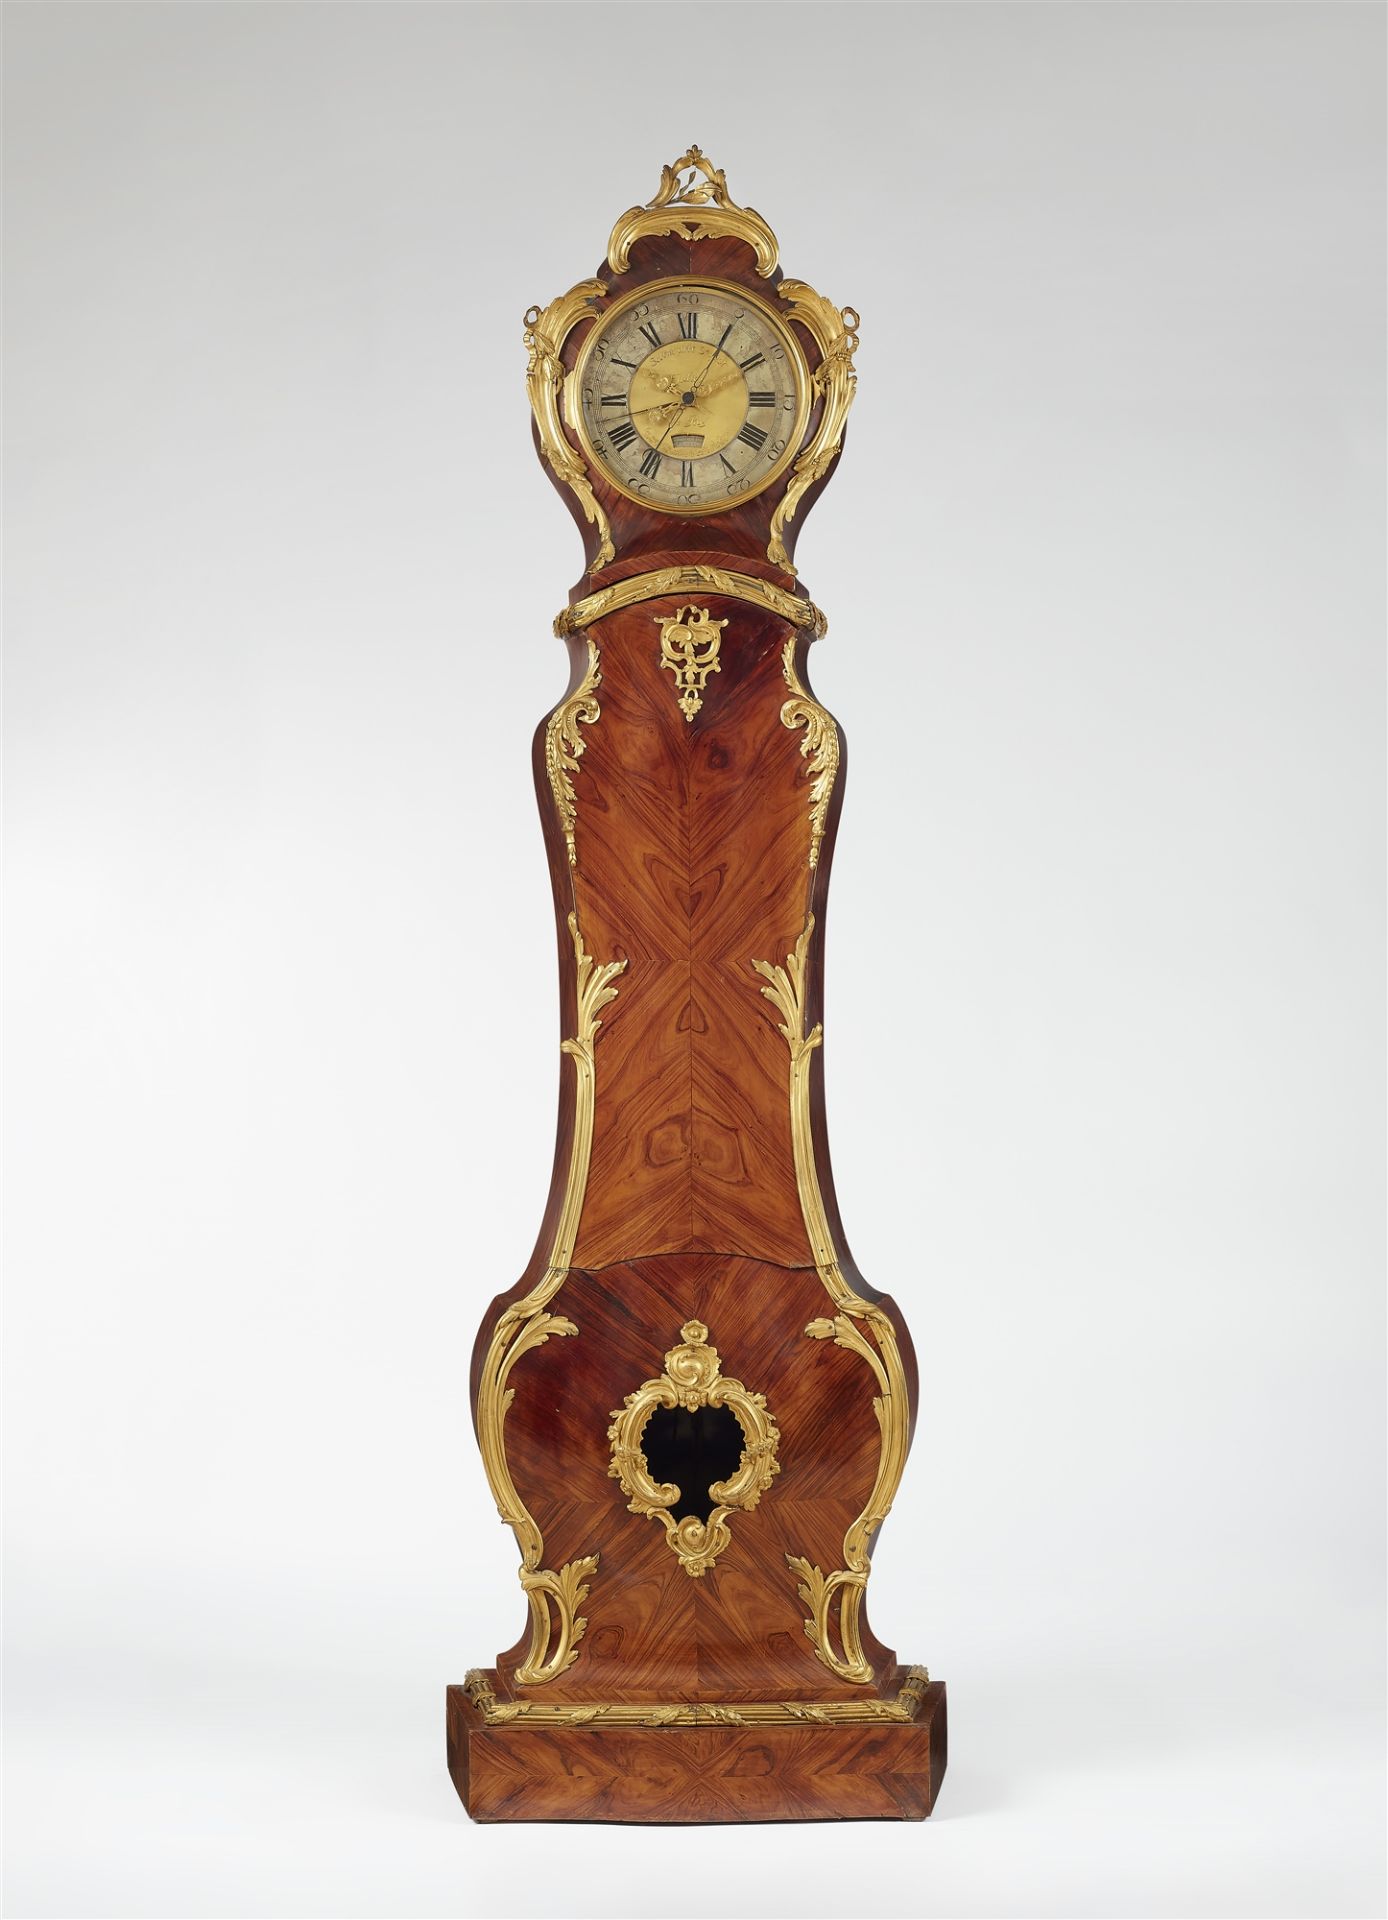 A Louis XV style regulator clock